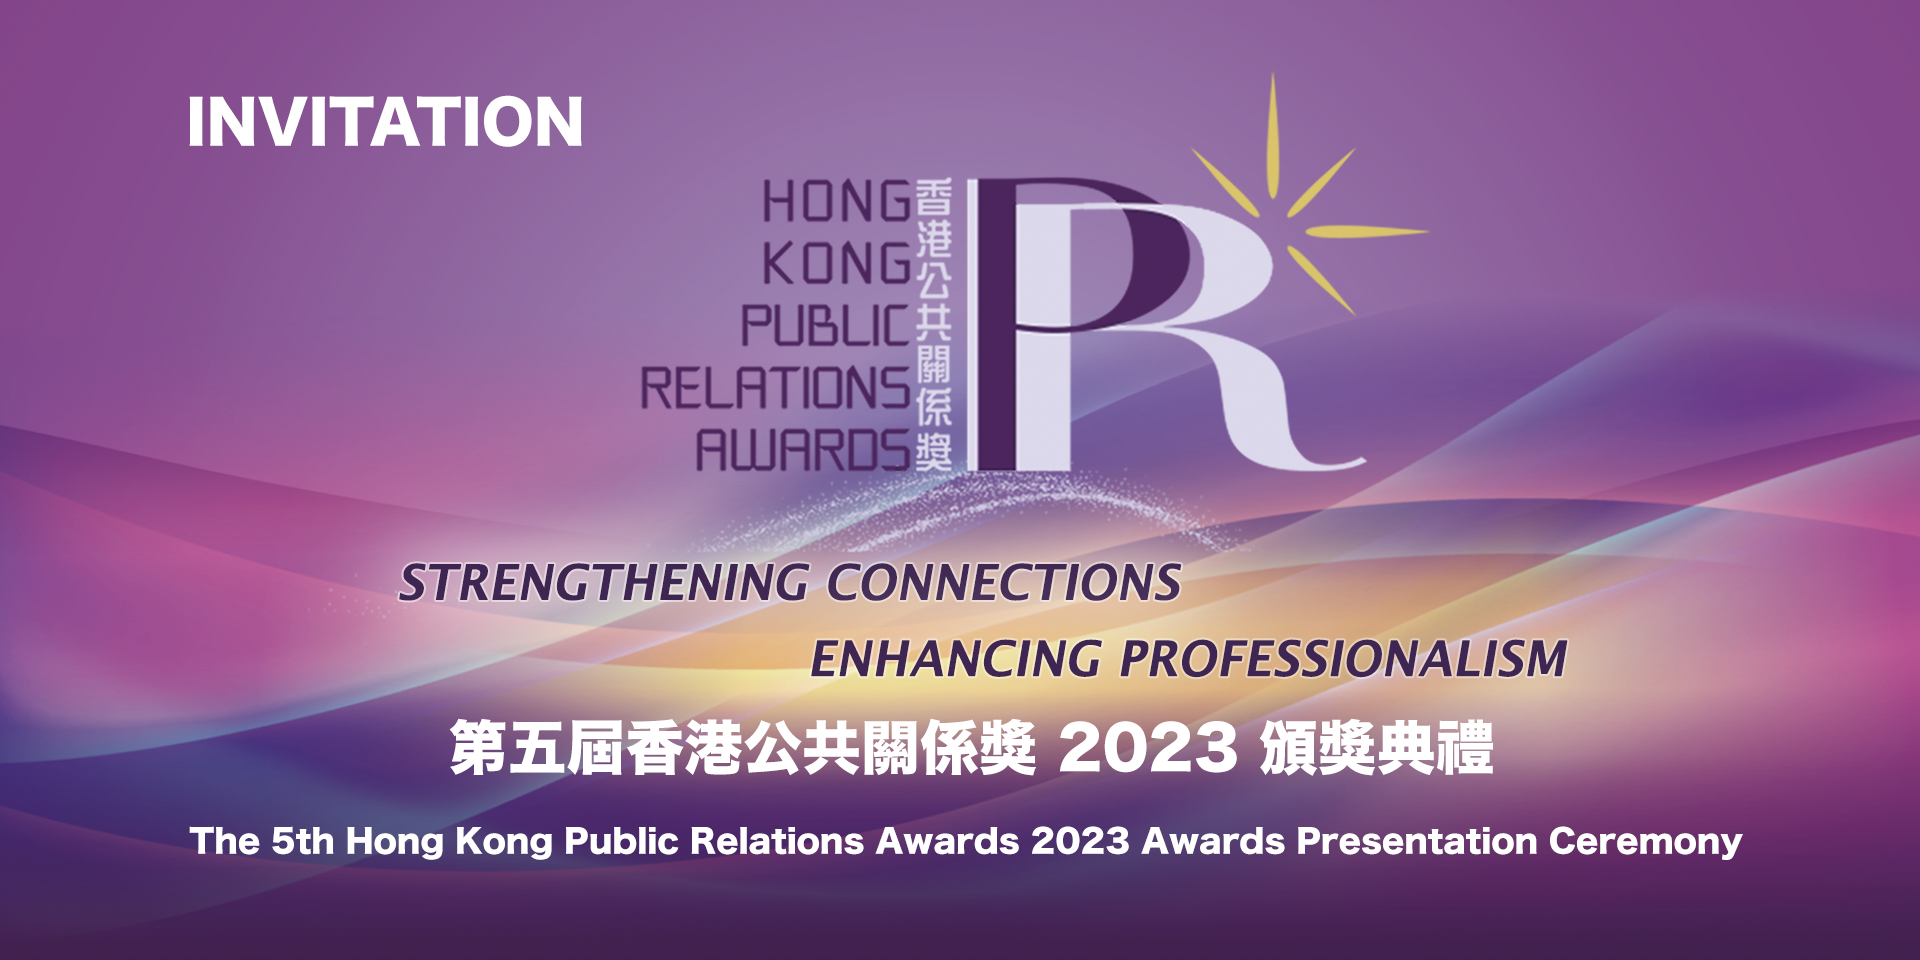 thumbnails The 5th Hong Kong Public Relations Awards (“HKPRA”) 2023 Awards Presentation Ceremony cum Gala Dinner